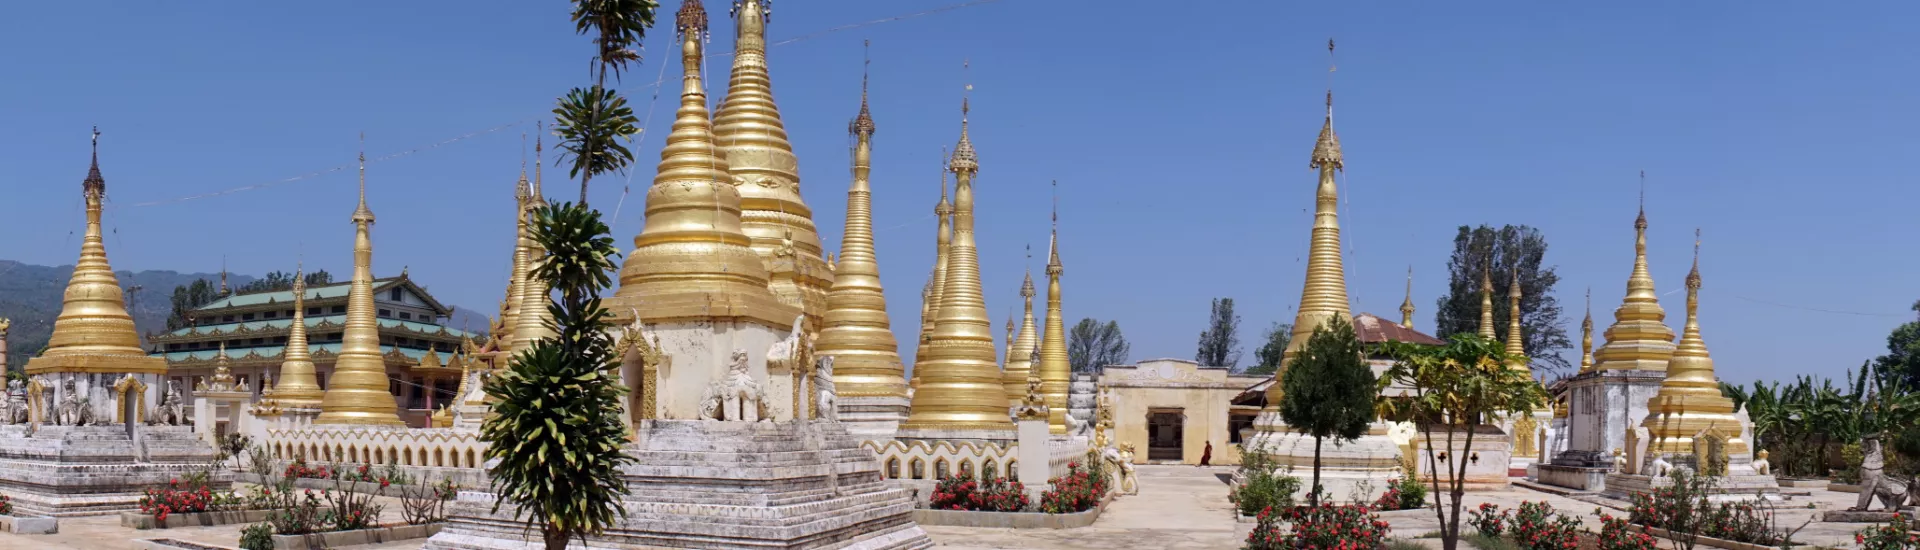 Stupas in a monastery, Myanmar